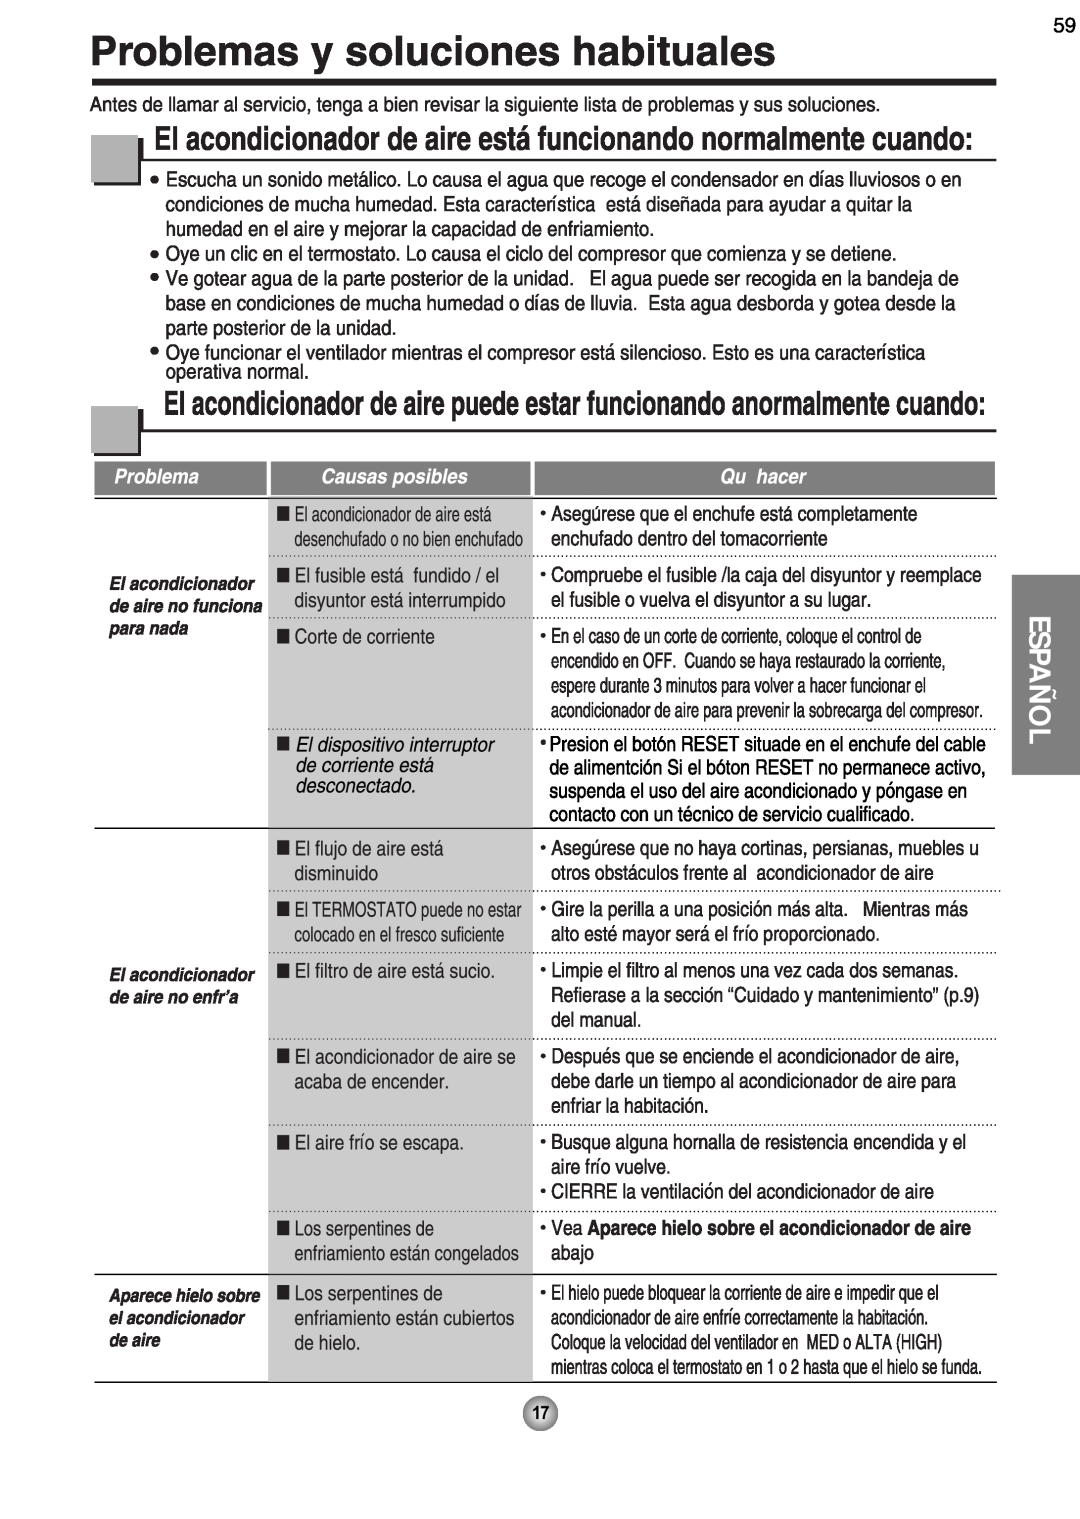 Friedrich CP08 operation manual Español 